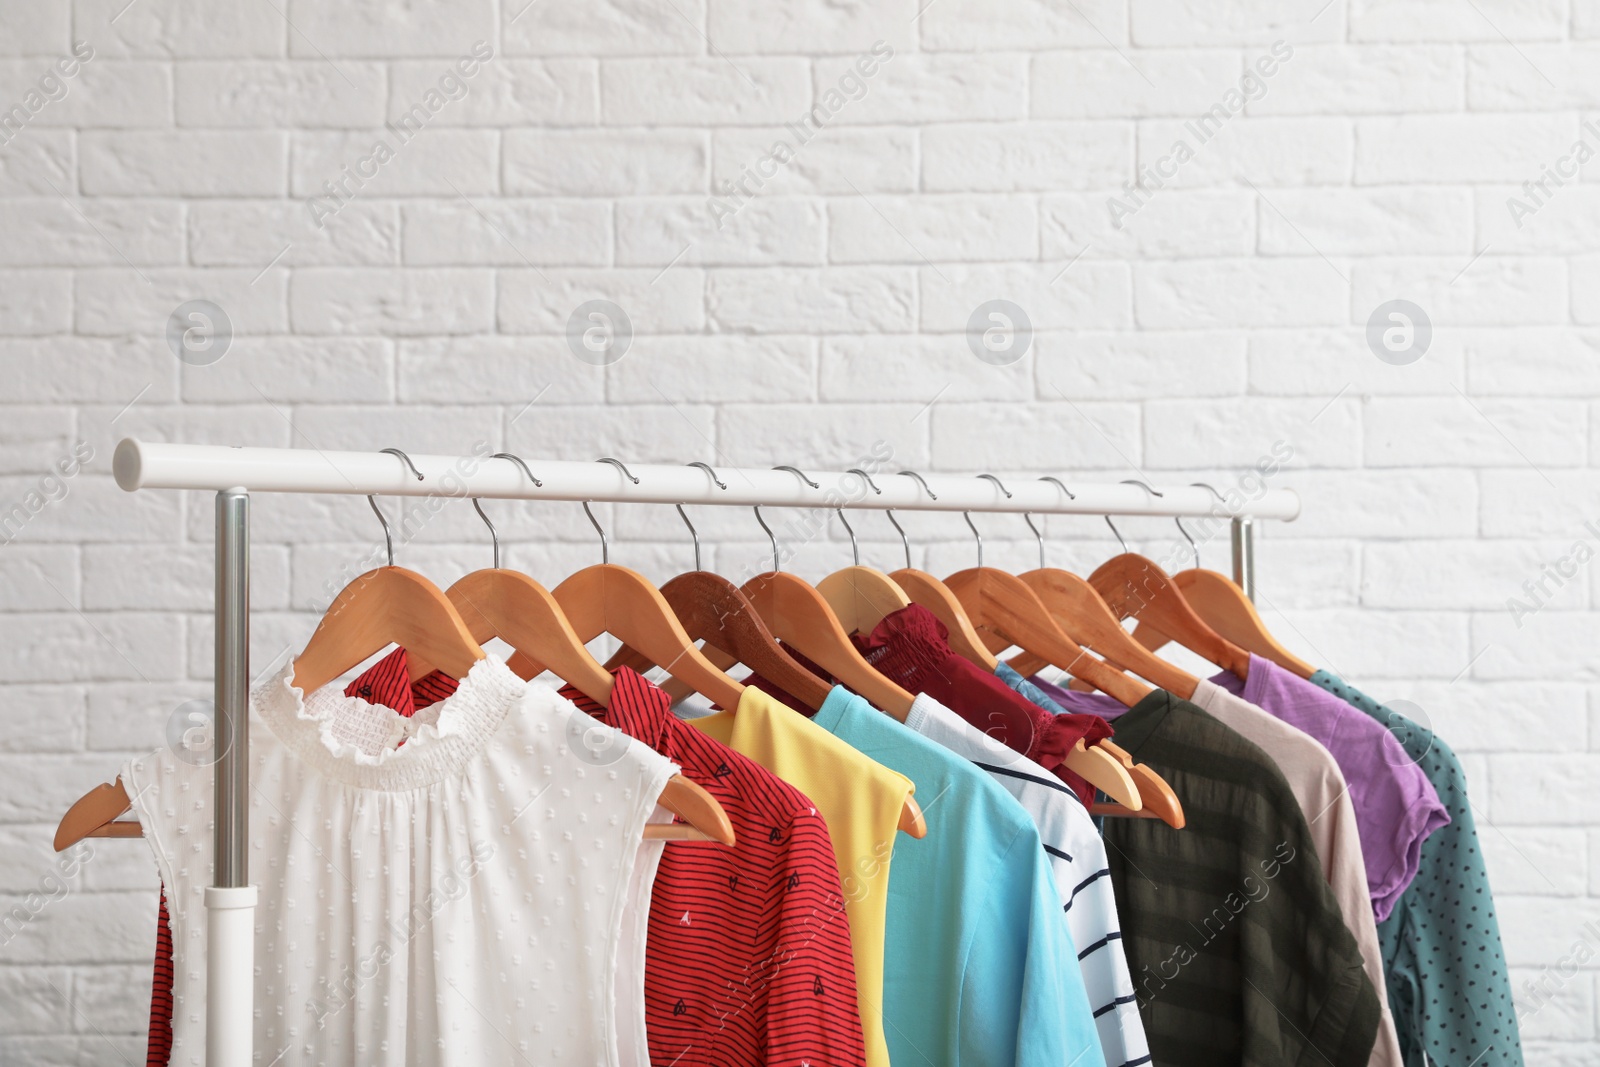 Photo of Wardrobe rack with stylish clothes near brick wall indoors